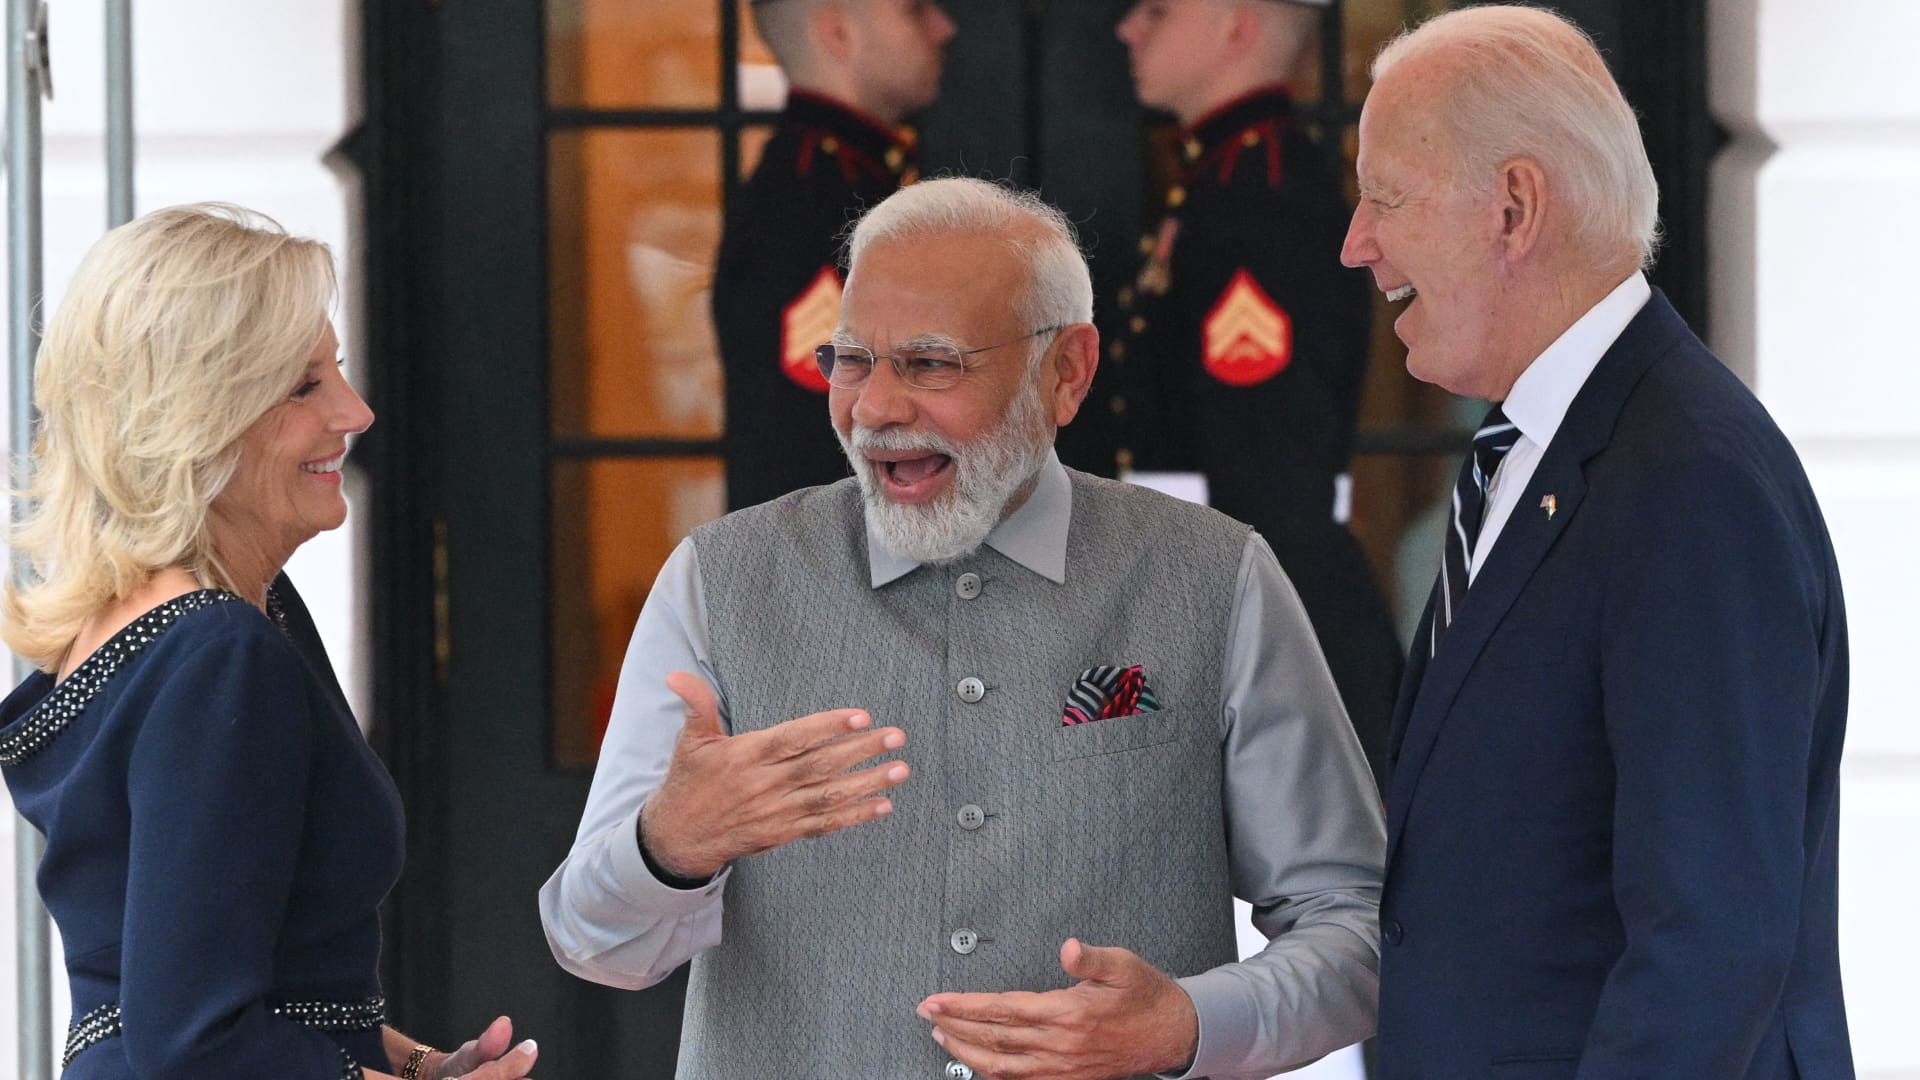 Watch dwell: President Biden and India Prime Minister Modi speak at the White House